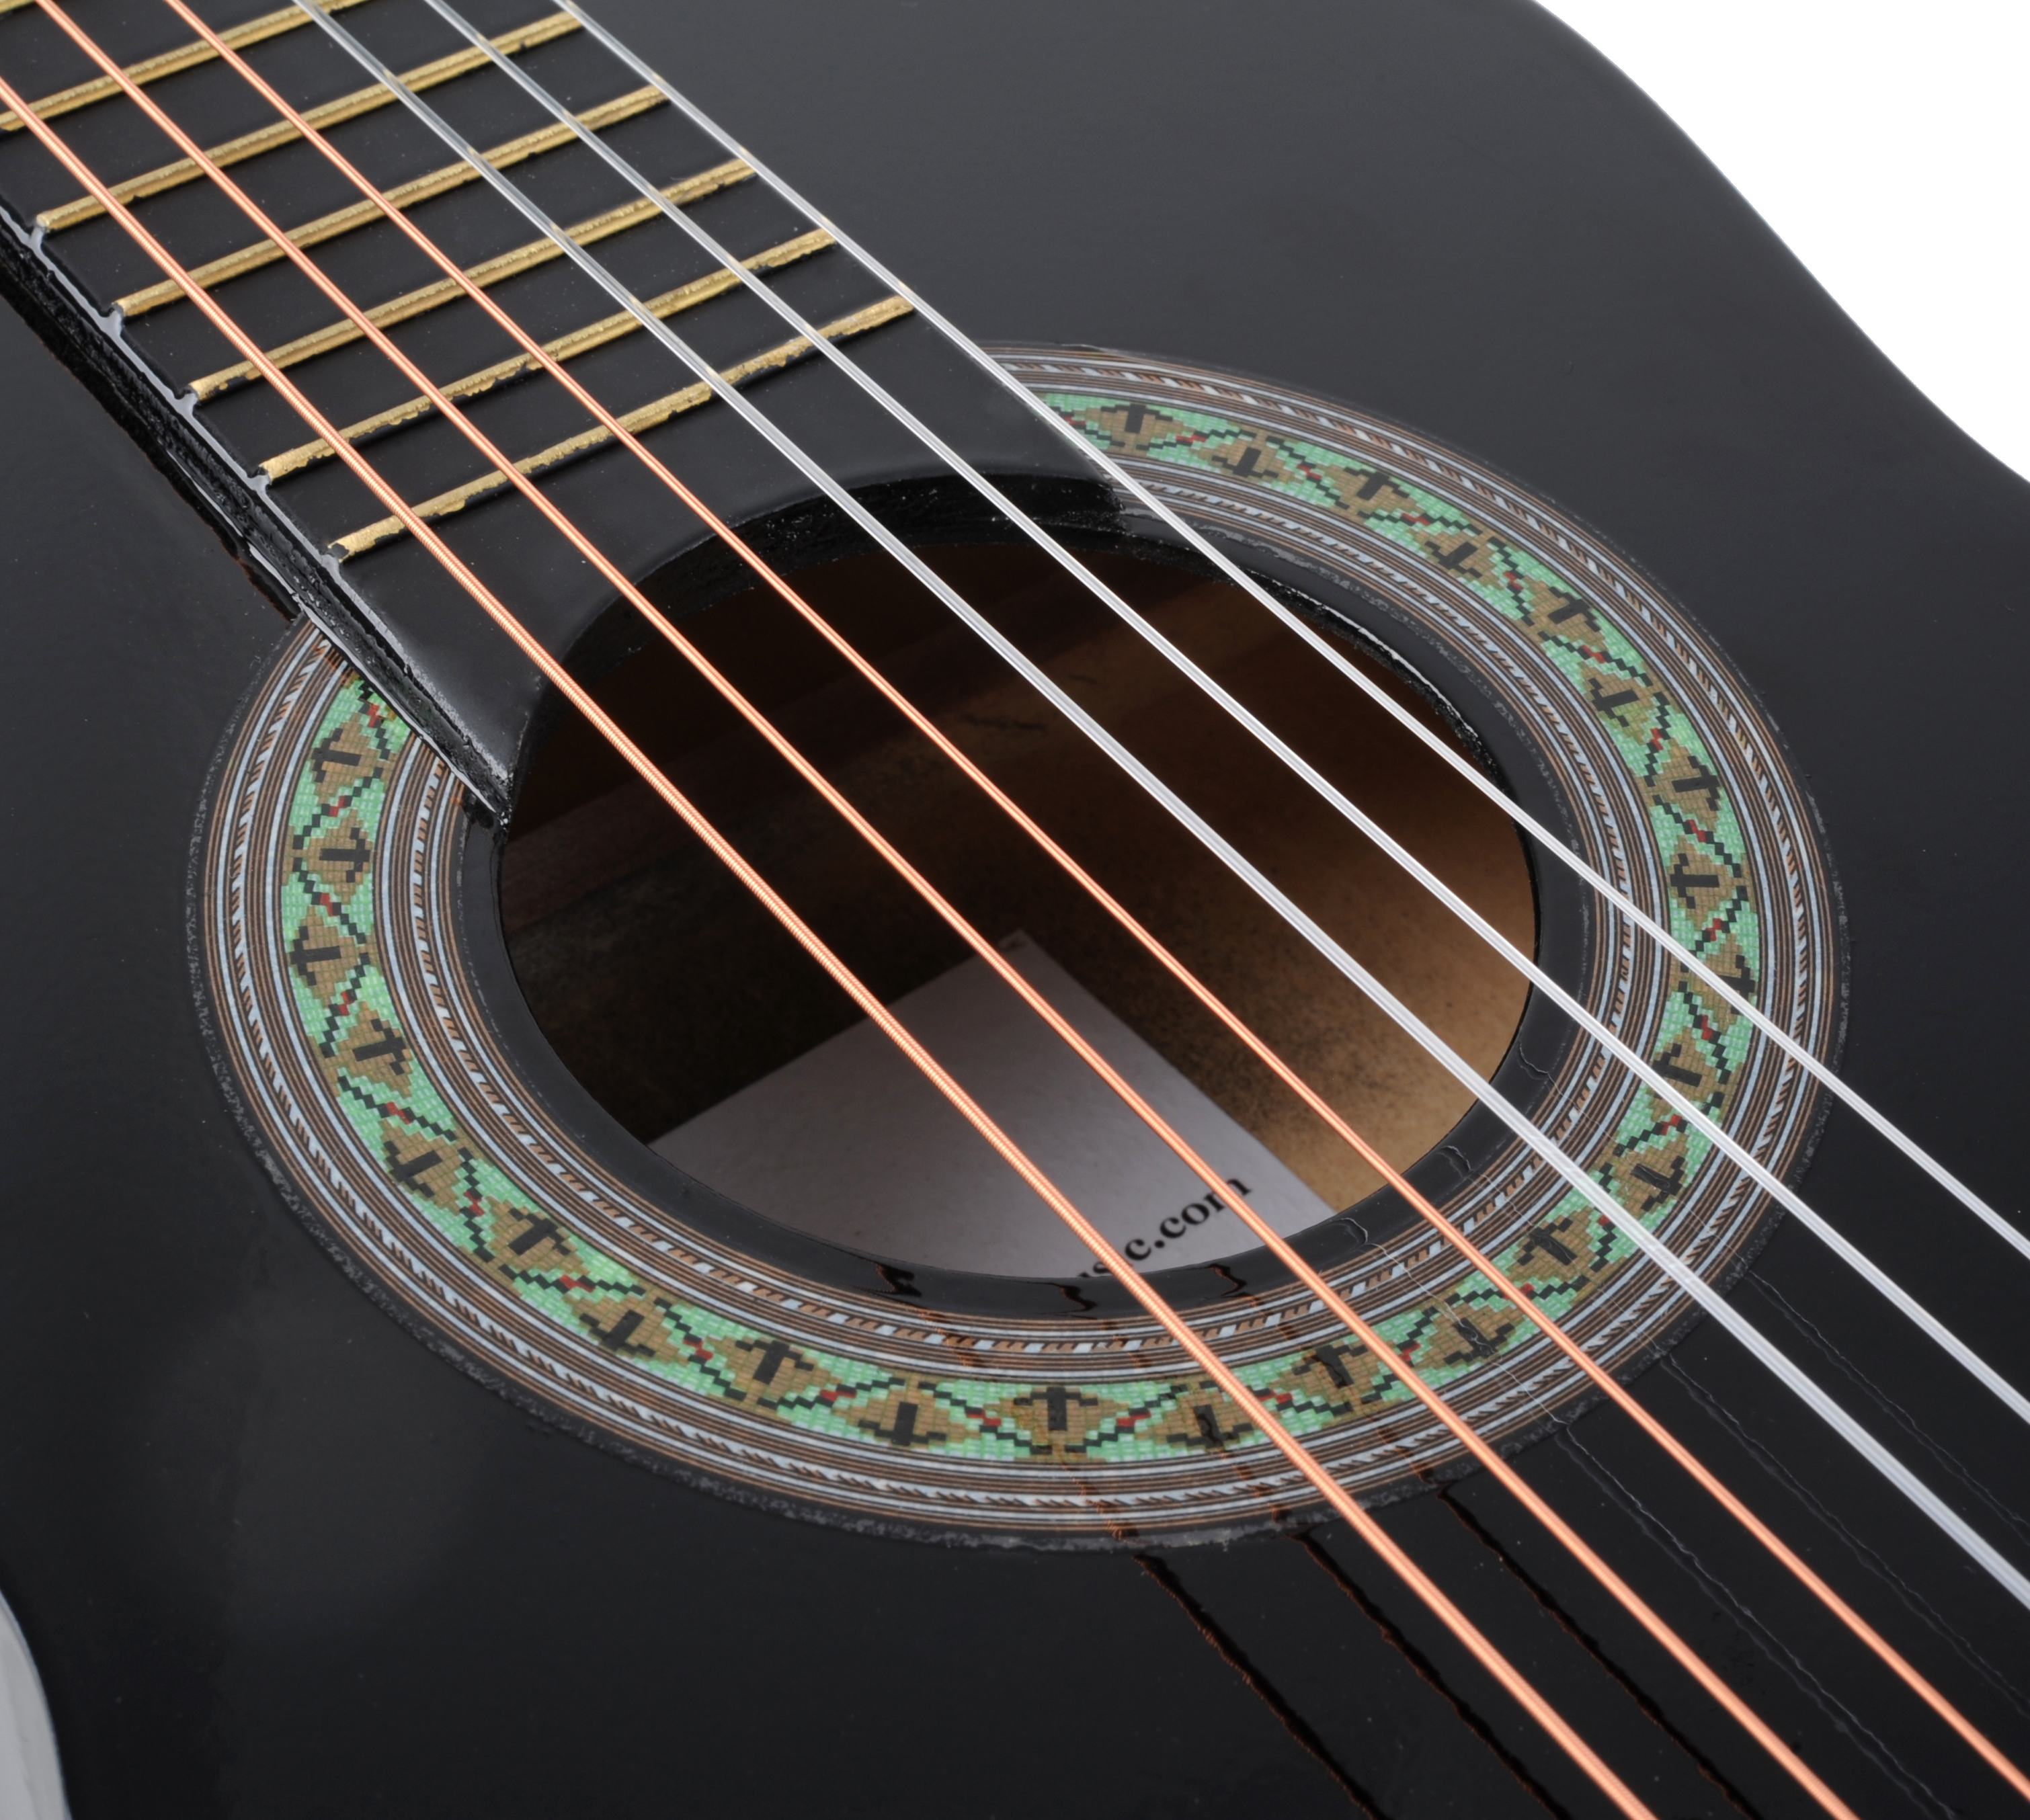 Guitarra clásica de madera contrachapada de tilo de tamaño pequeño de 30 " (AC30L)